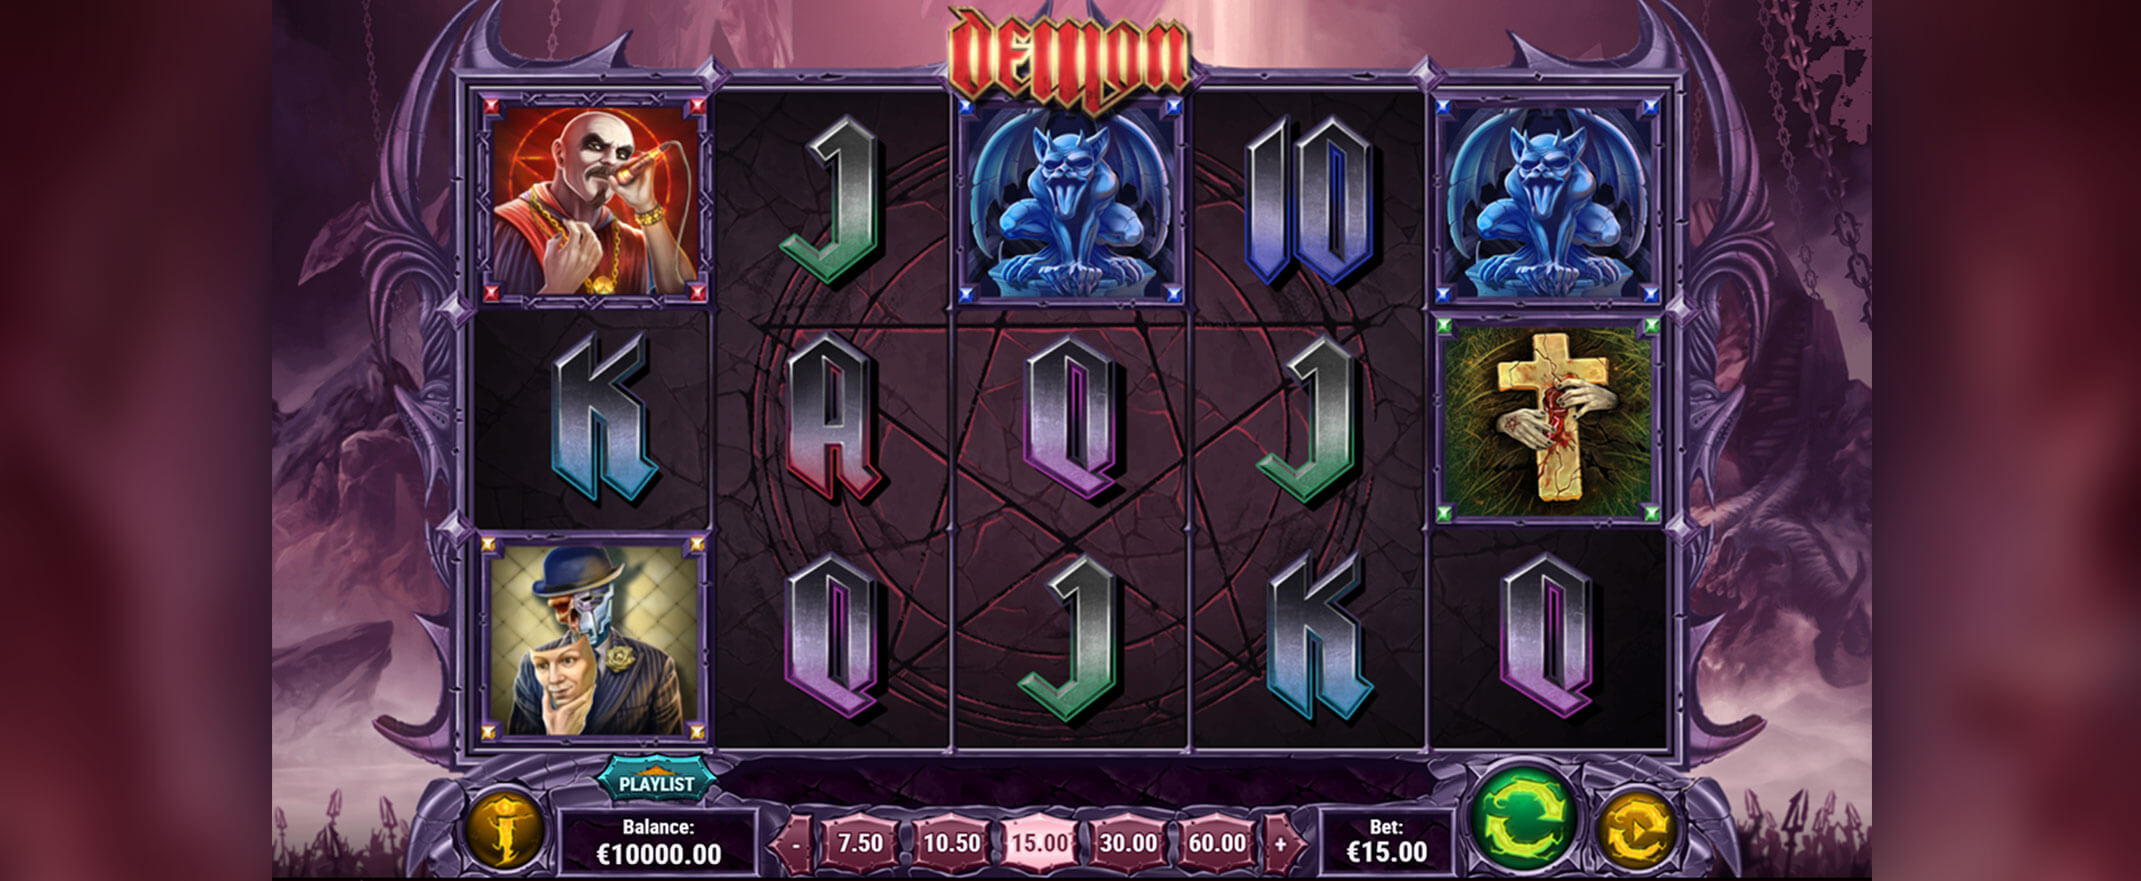 Demon slot by Play N Go